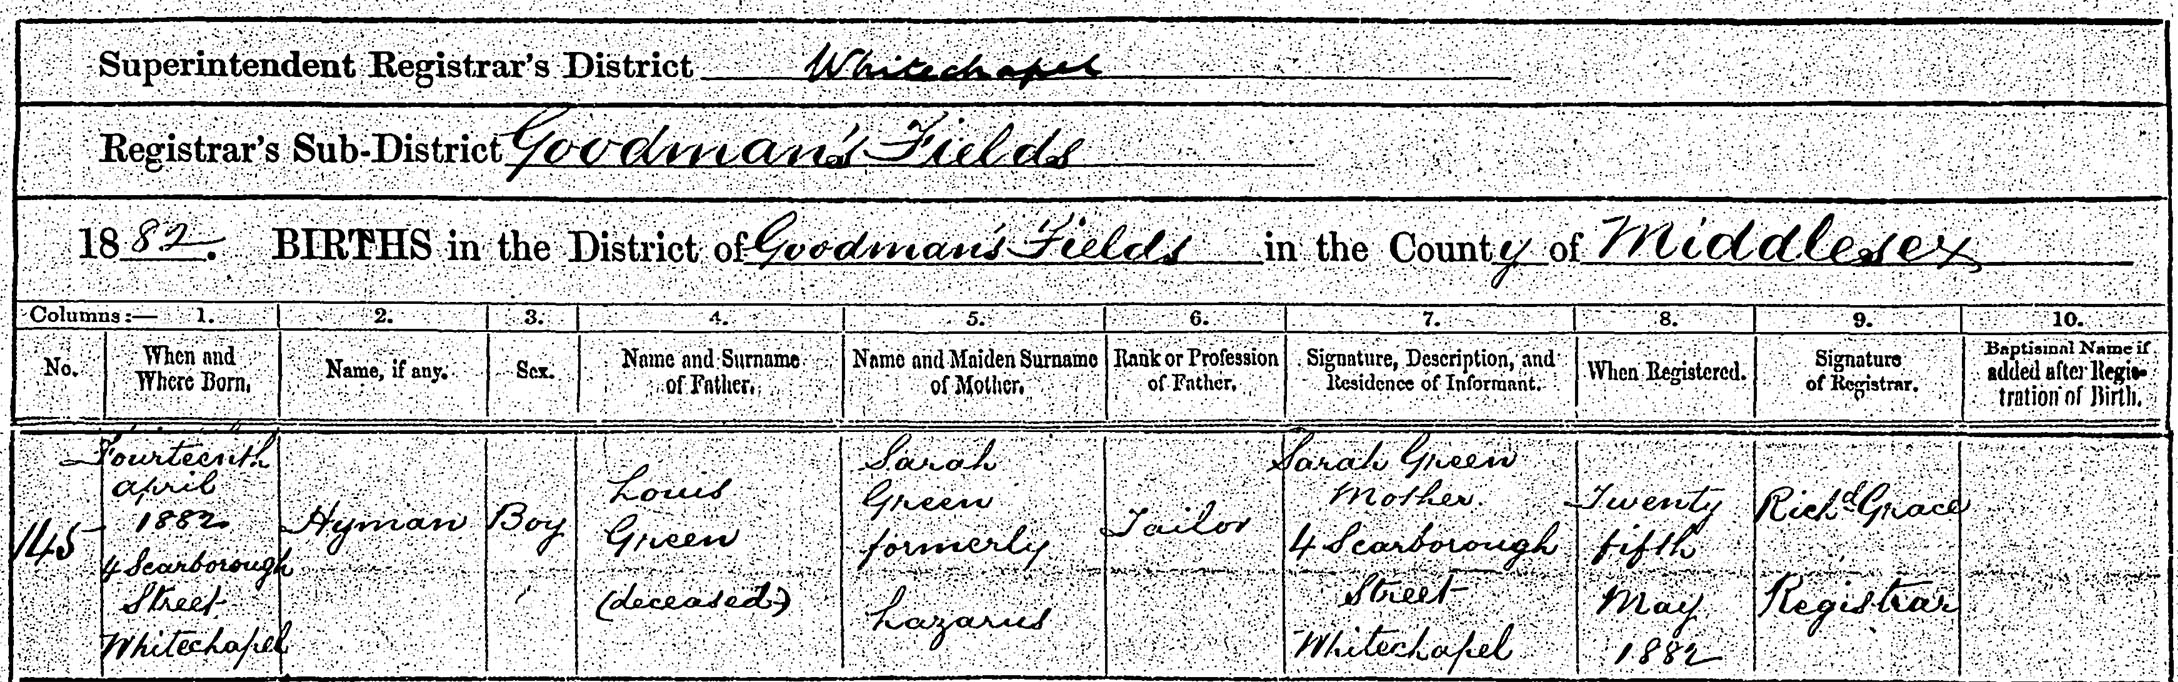 Hyman Green (1882-1950) - Birth Certificate (Goodmans Fields, Middelsex, London, 1882)